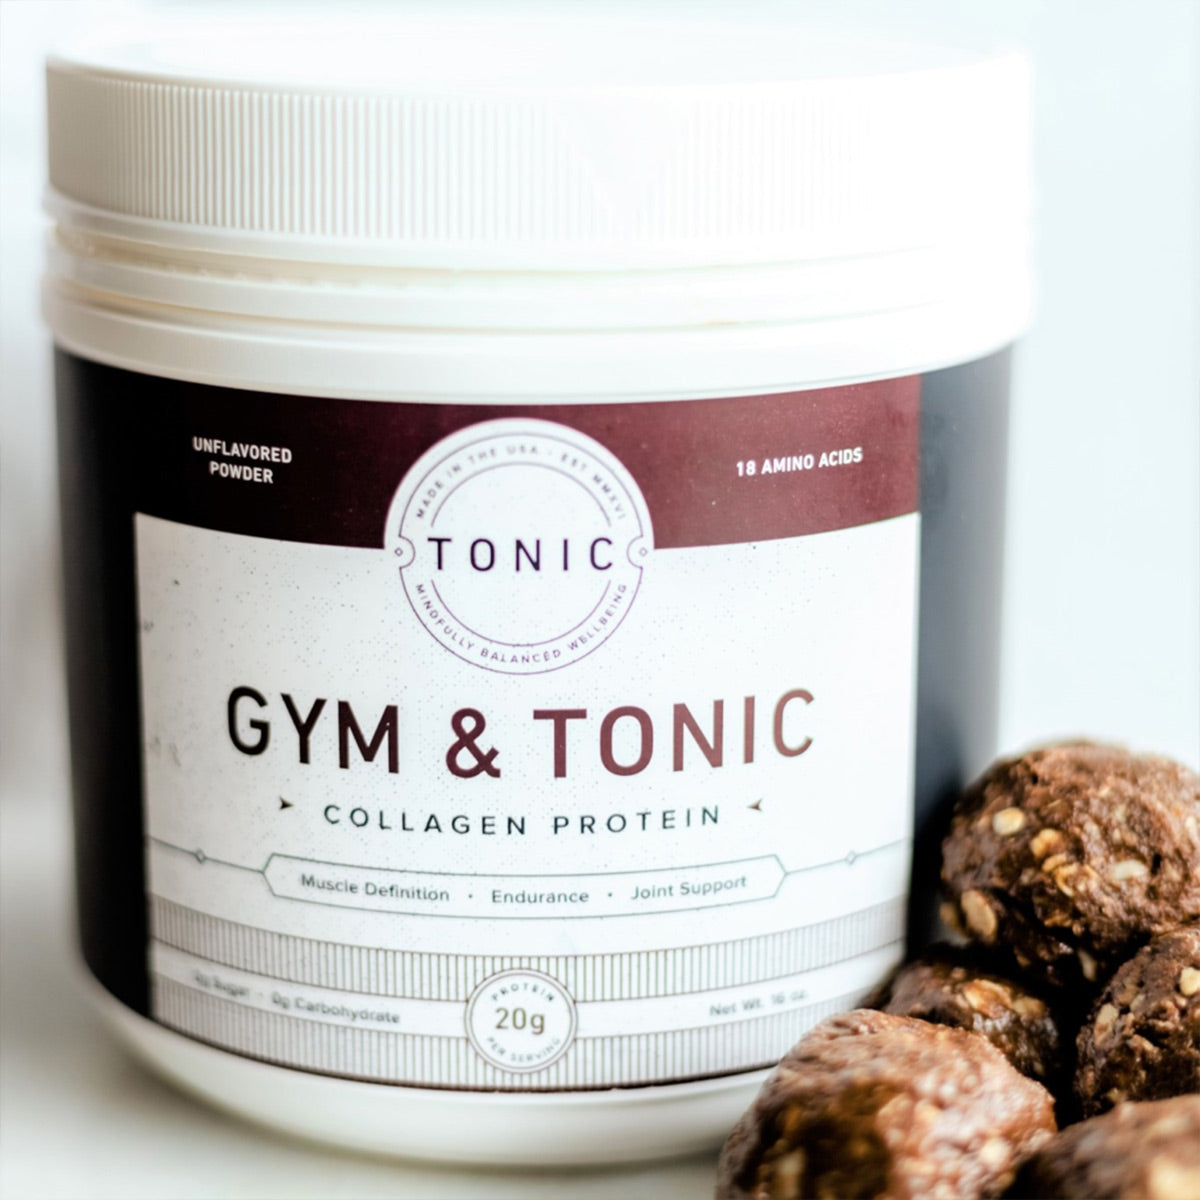 Gym & Tonic Collagen Protein tub